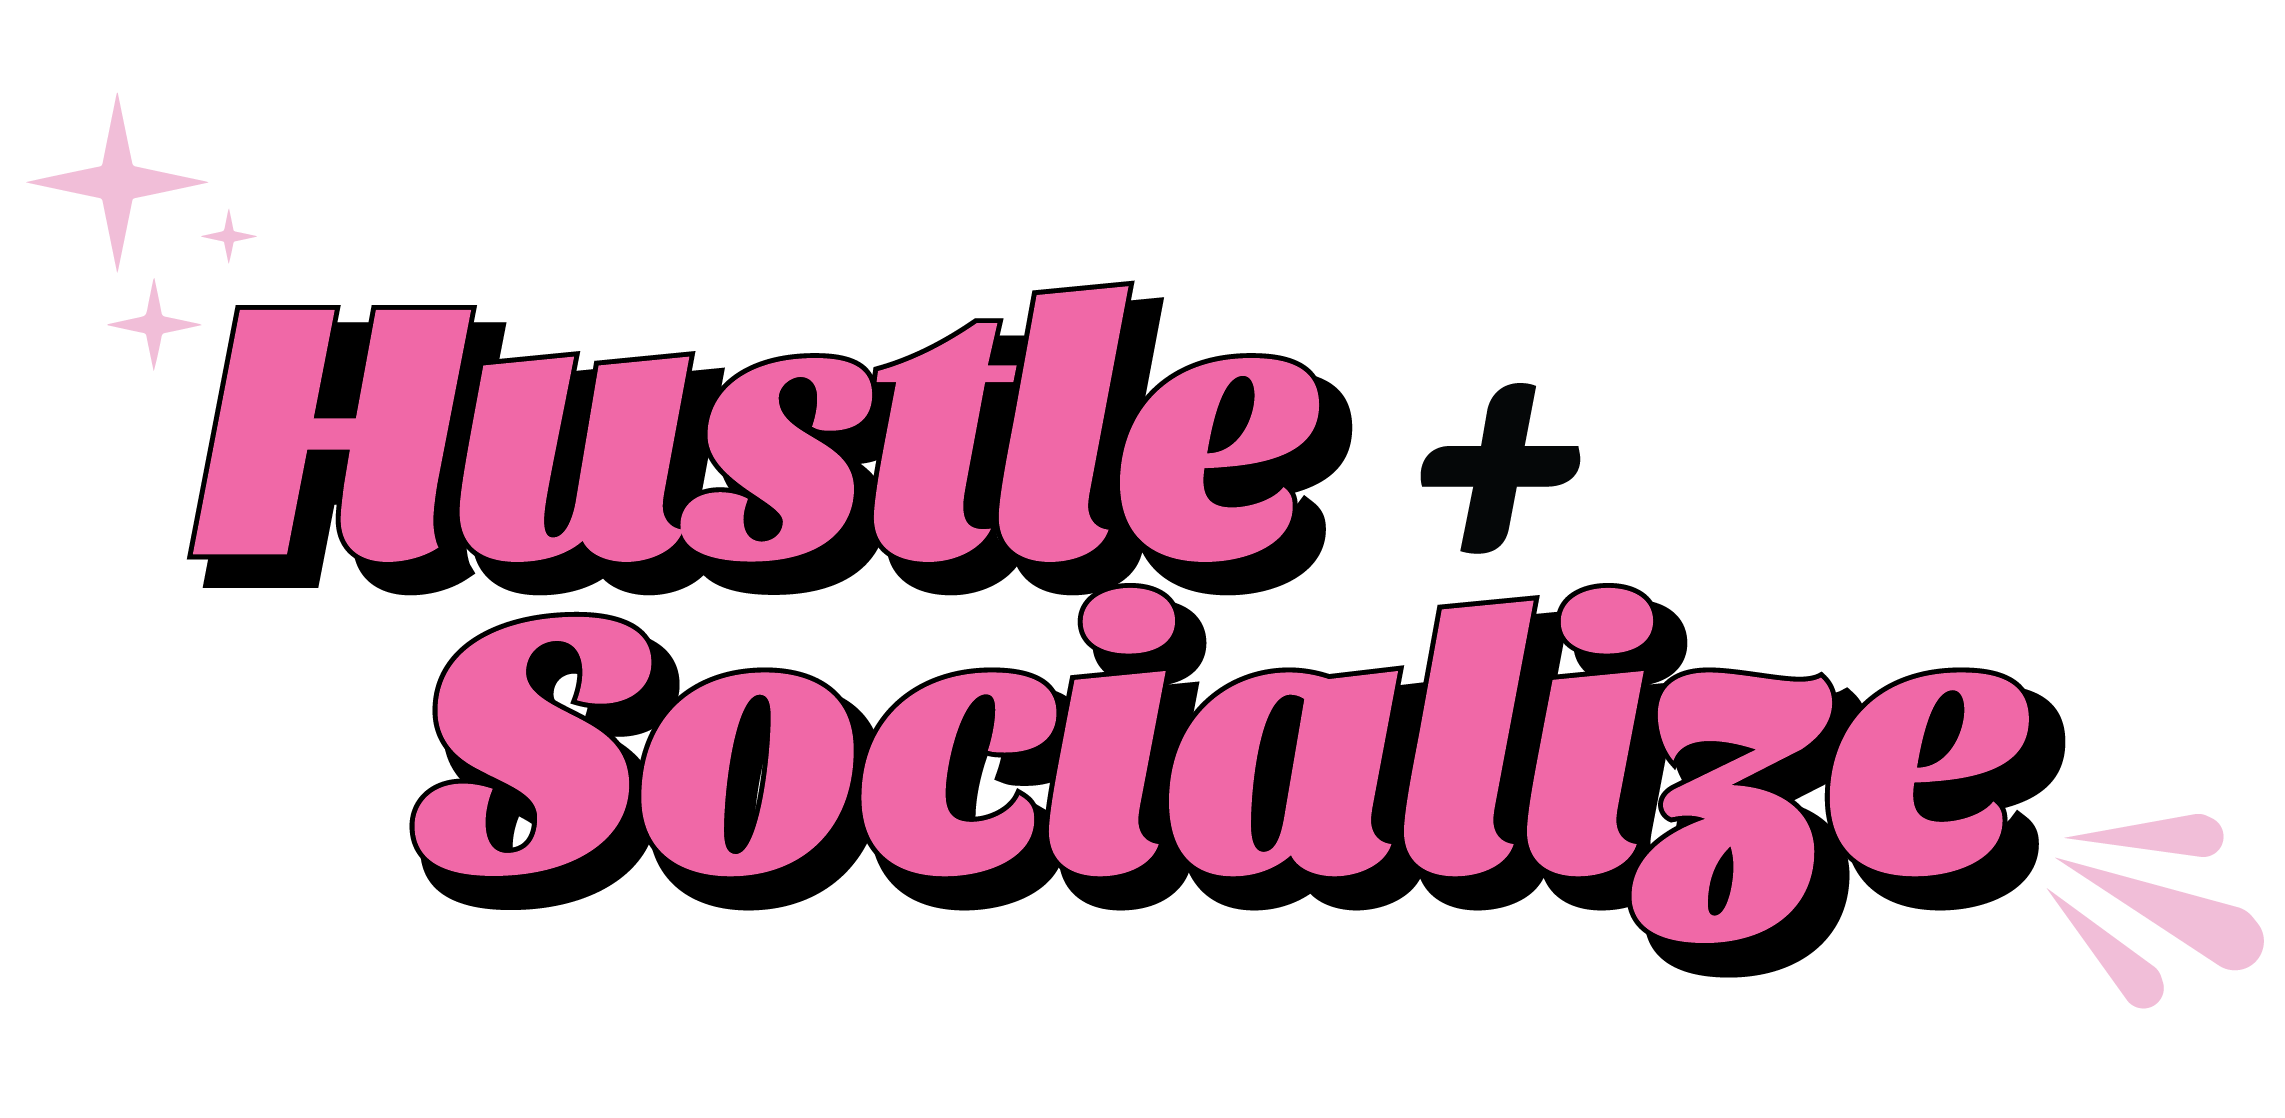 Hustle + Socialize